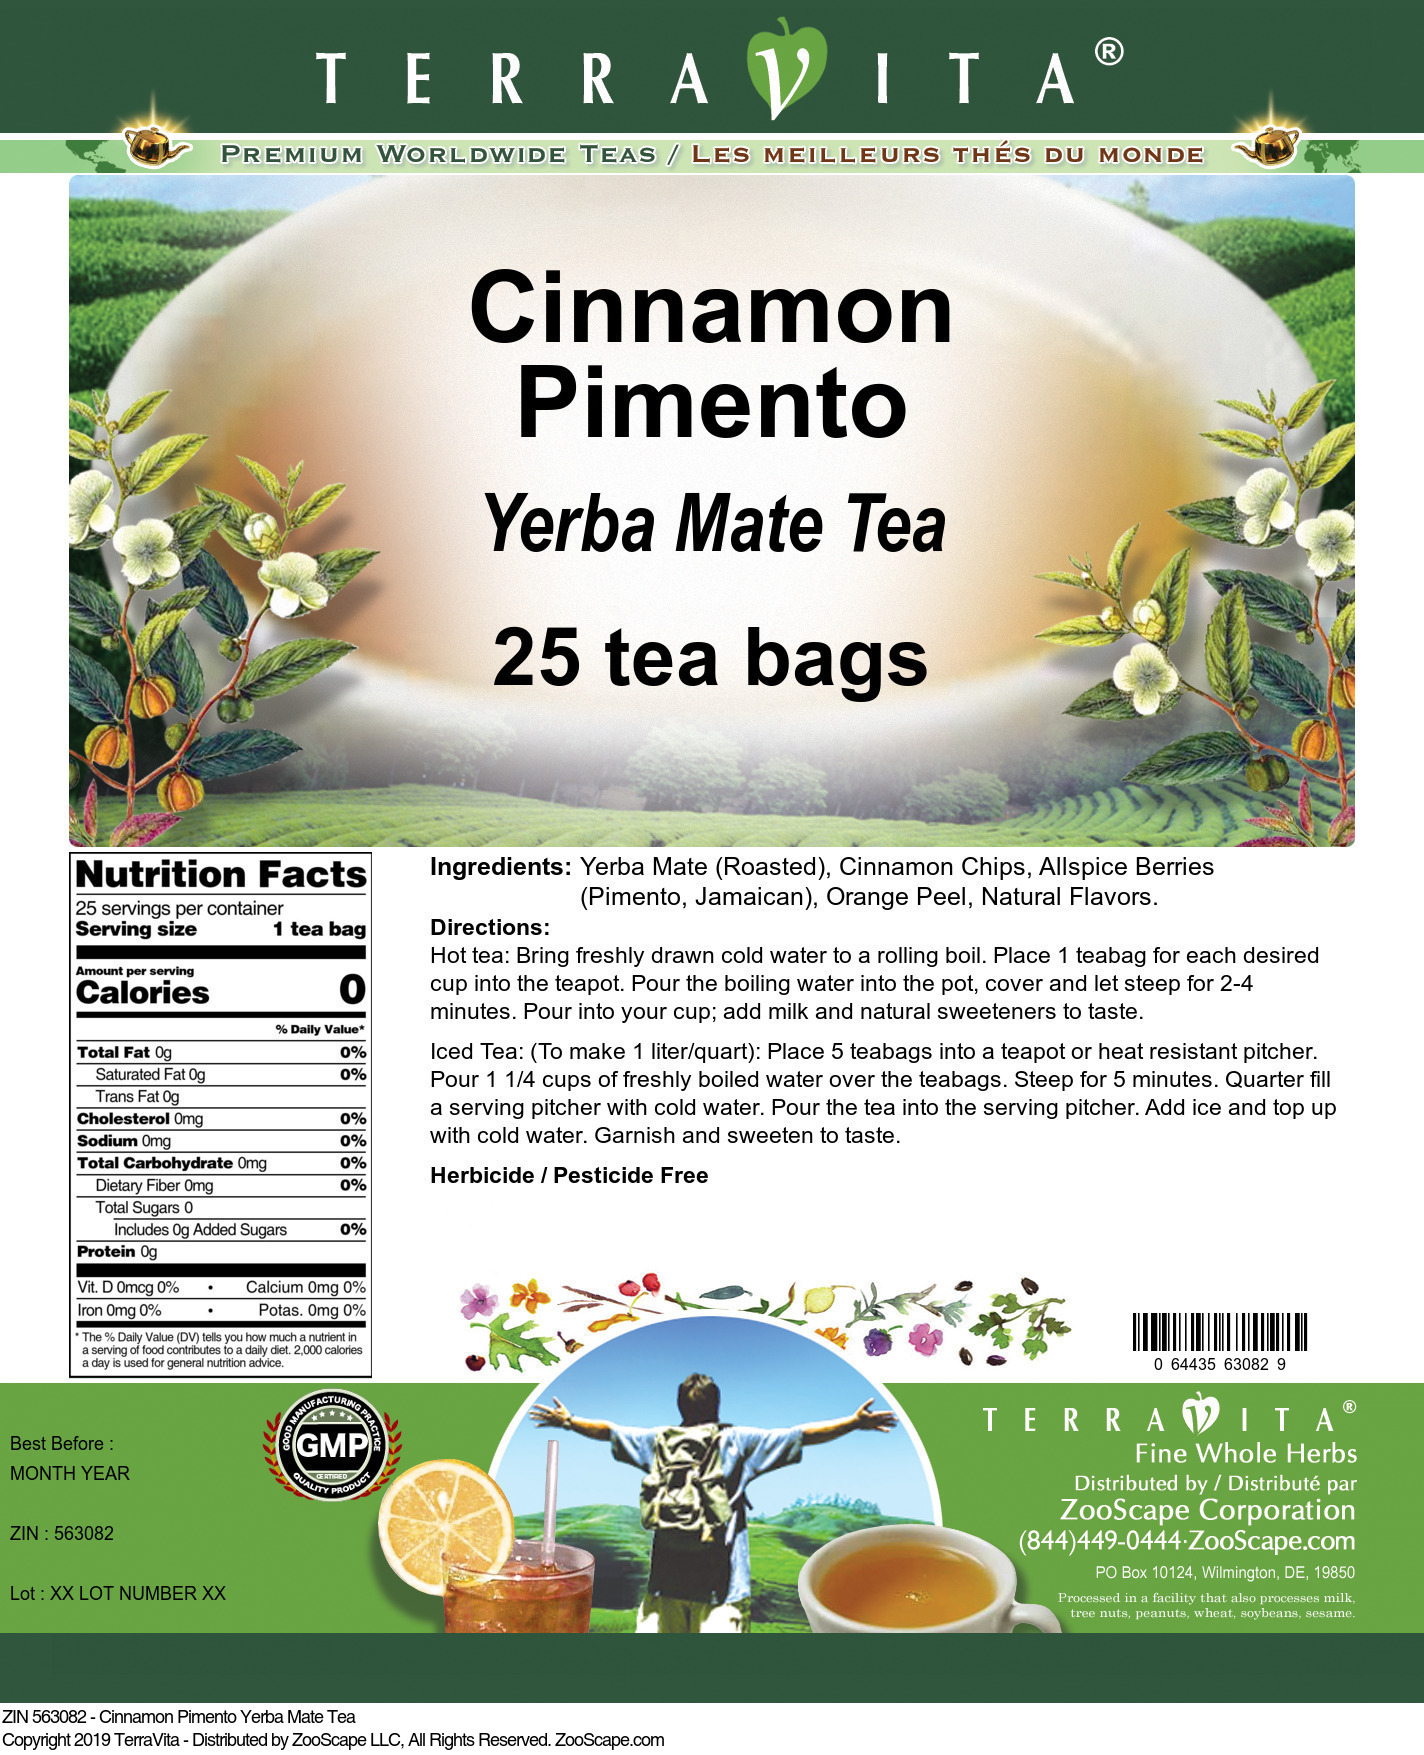 Cinnamon Pimento Yerba Mate Tea - Label